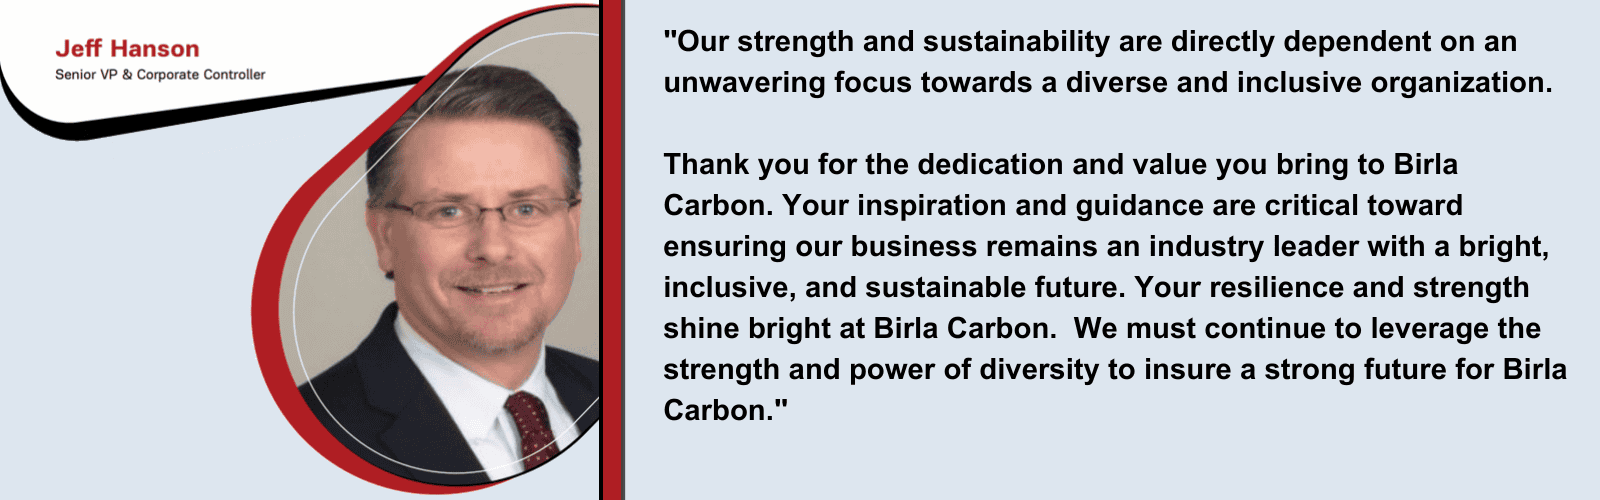 Birla Carbon Jeff Hanson Leadership Quote